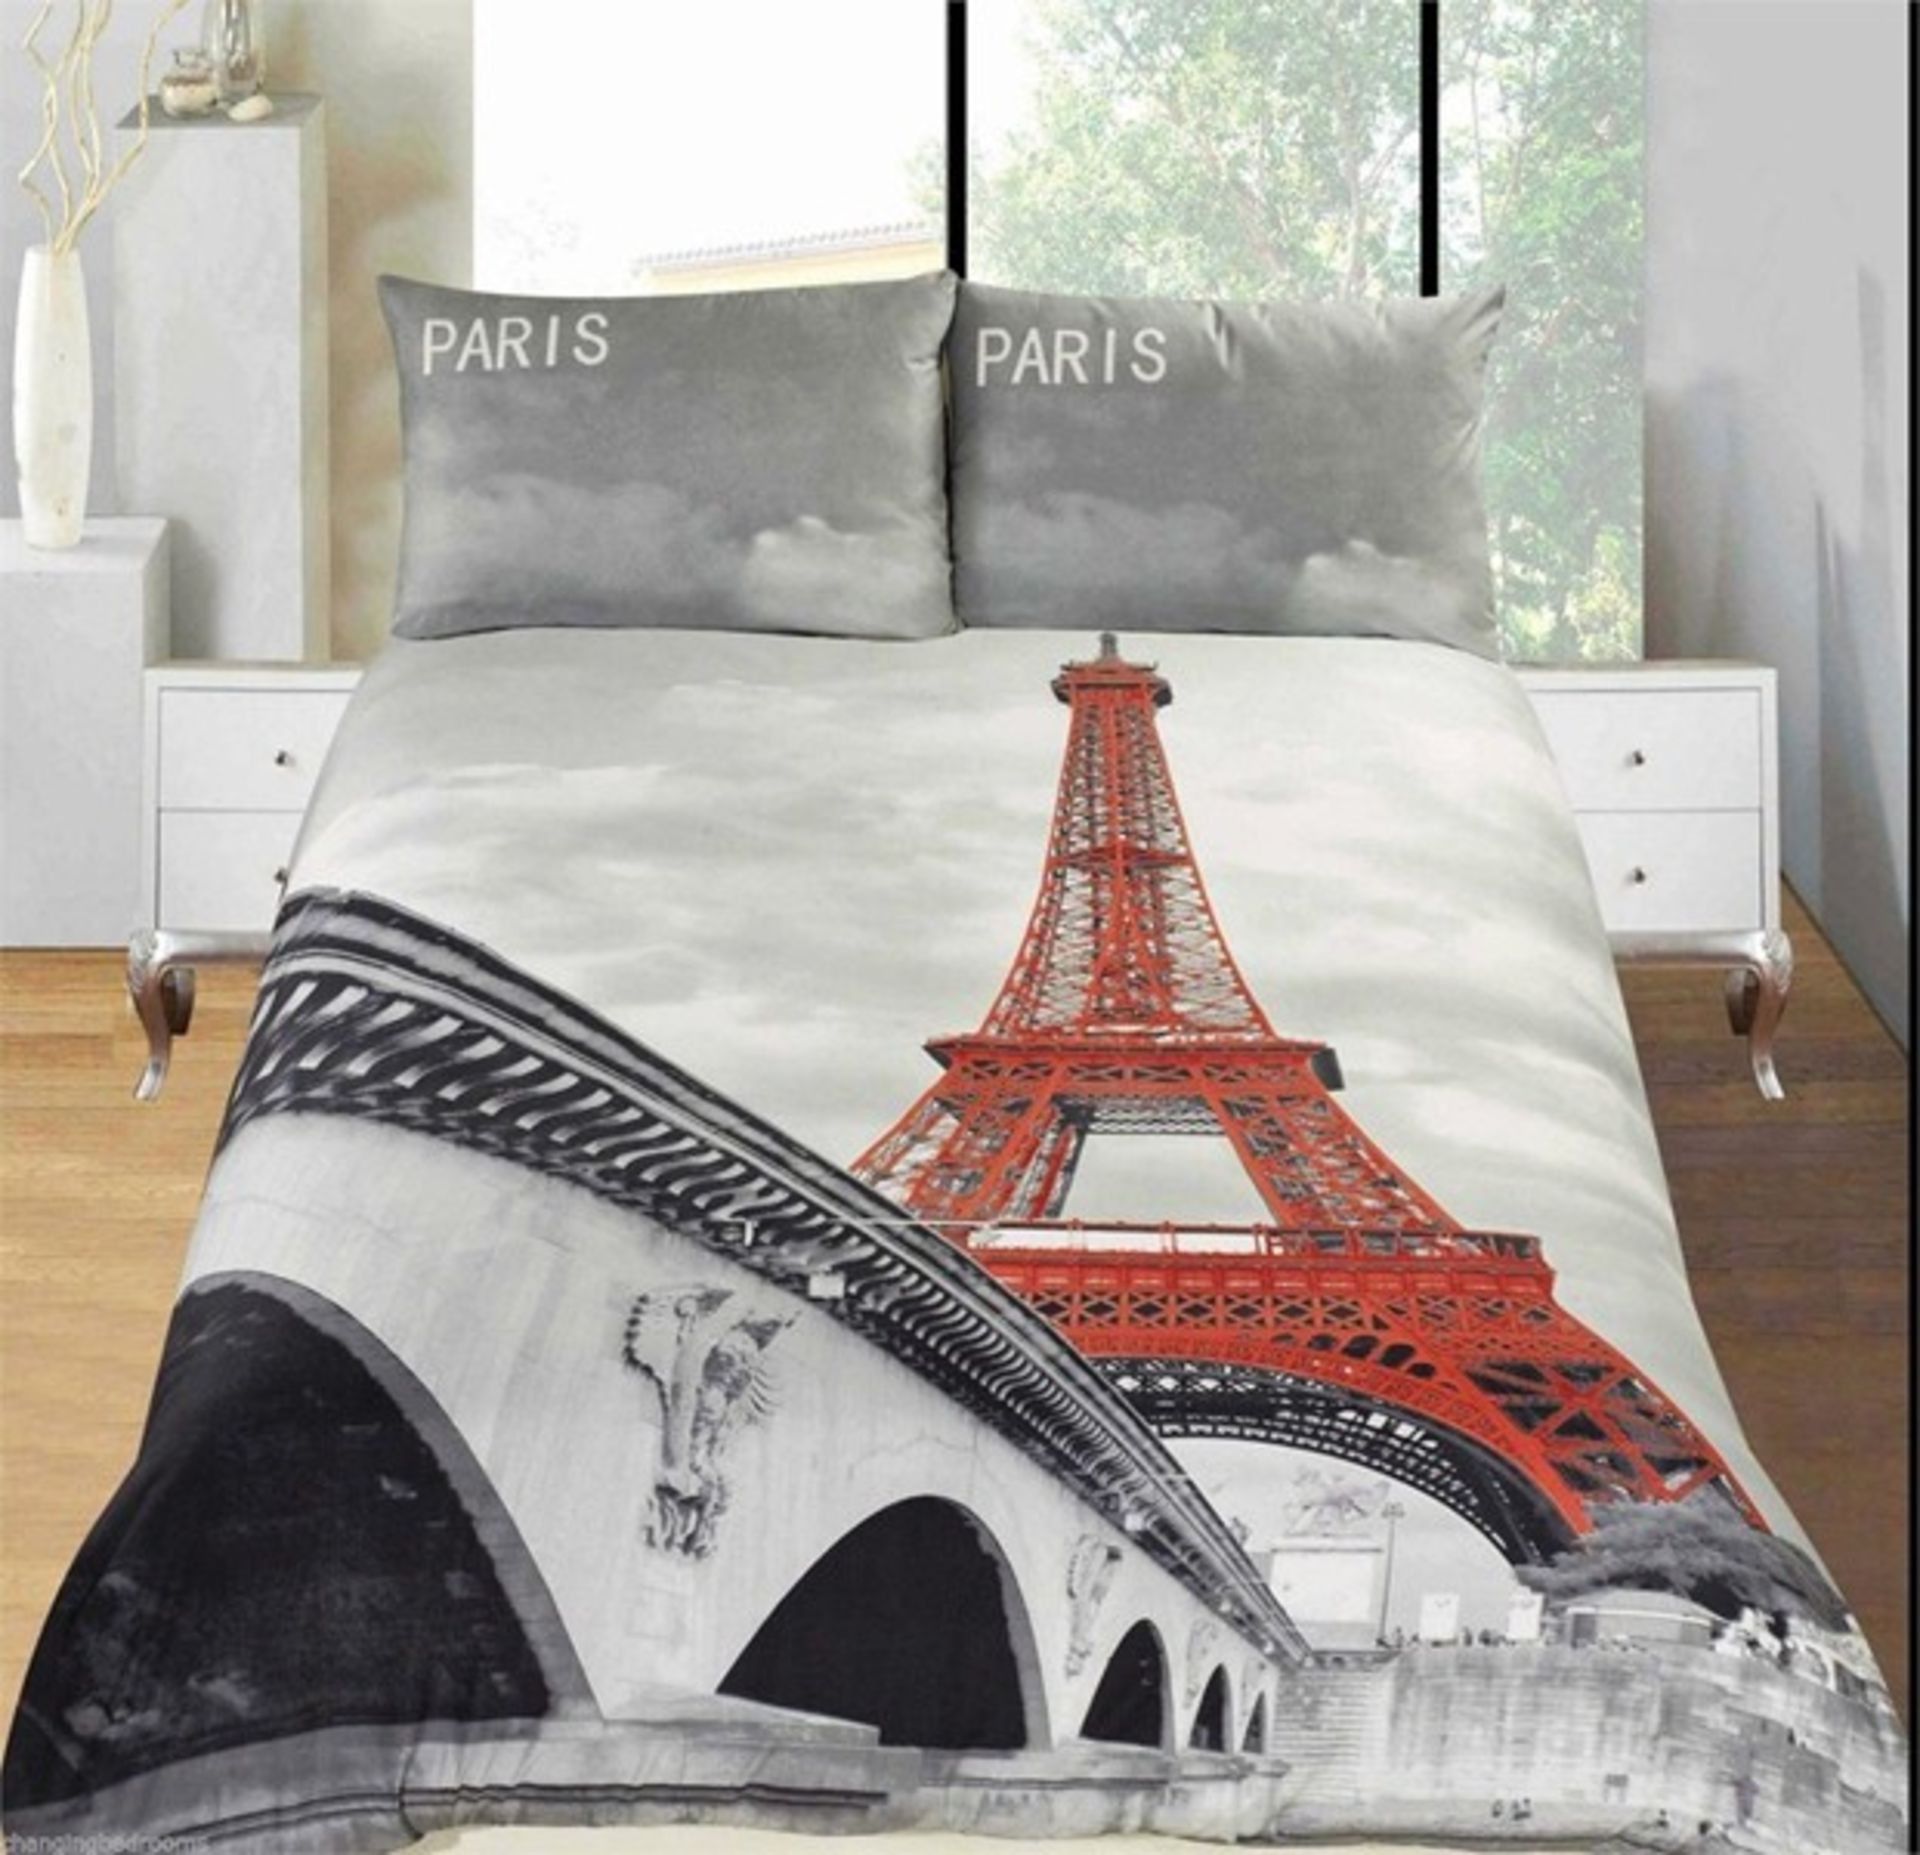 V Brand New 3 Piece Luxury King Size Duvet Set Incl 2 Pillow Cases In Paris Pattern SRP20.99